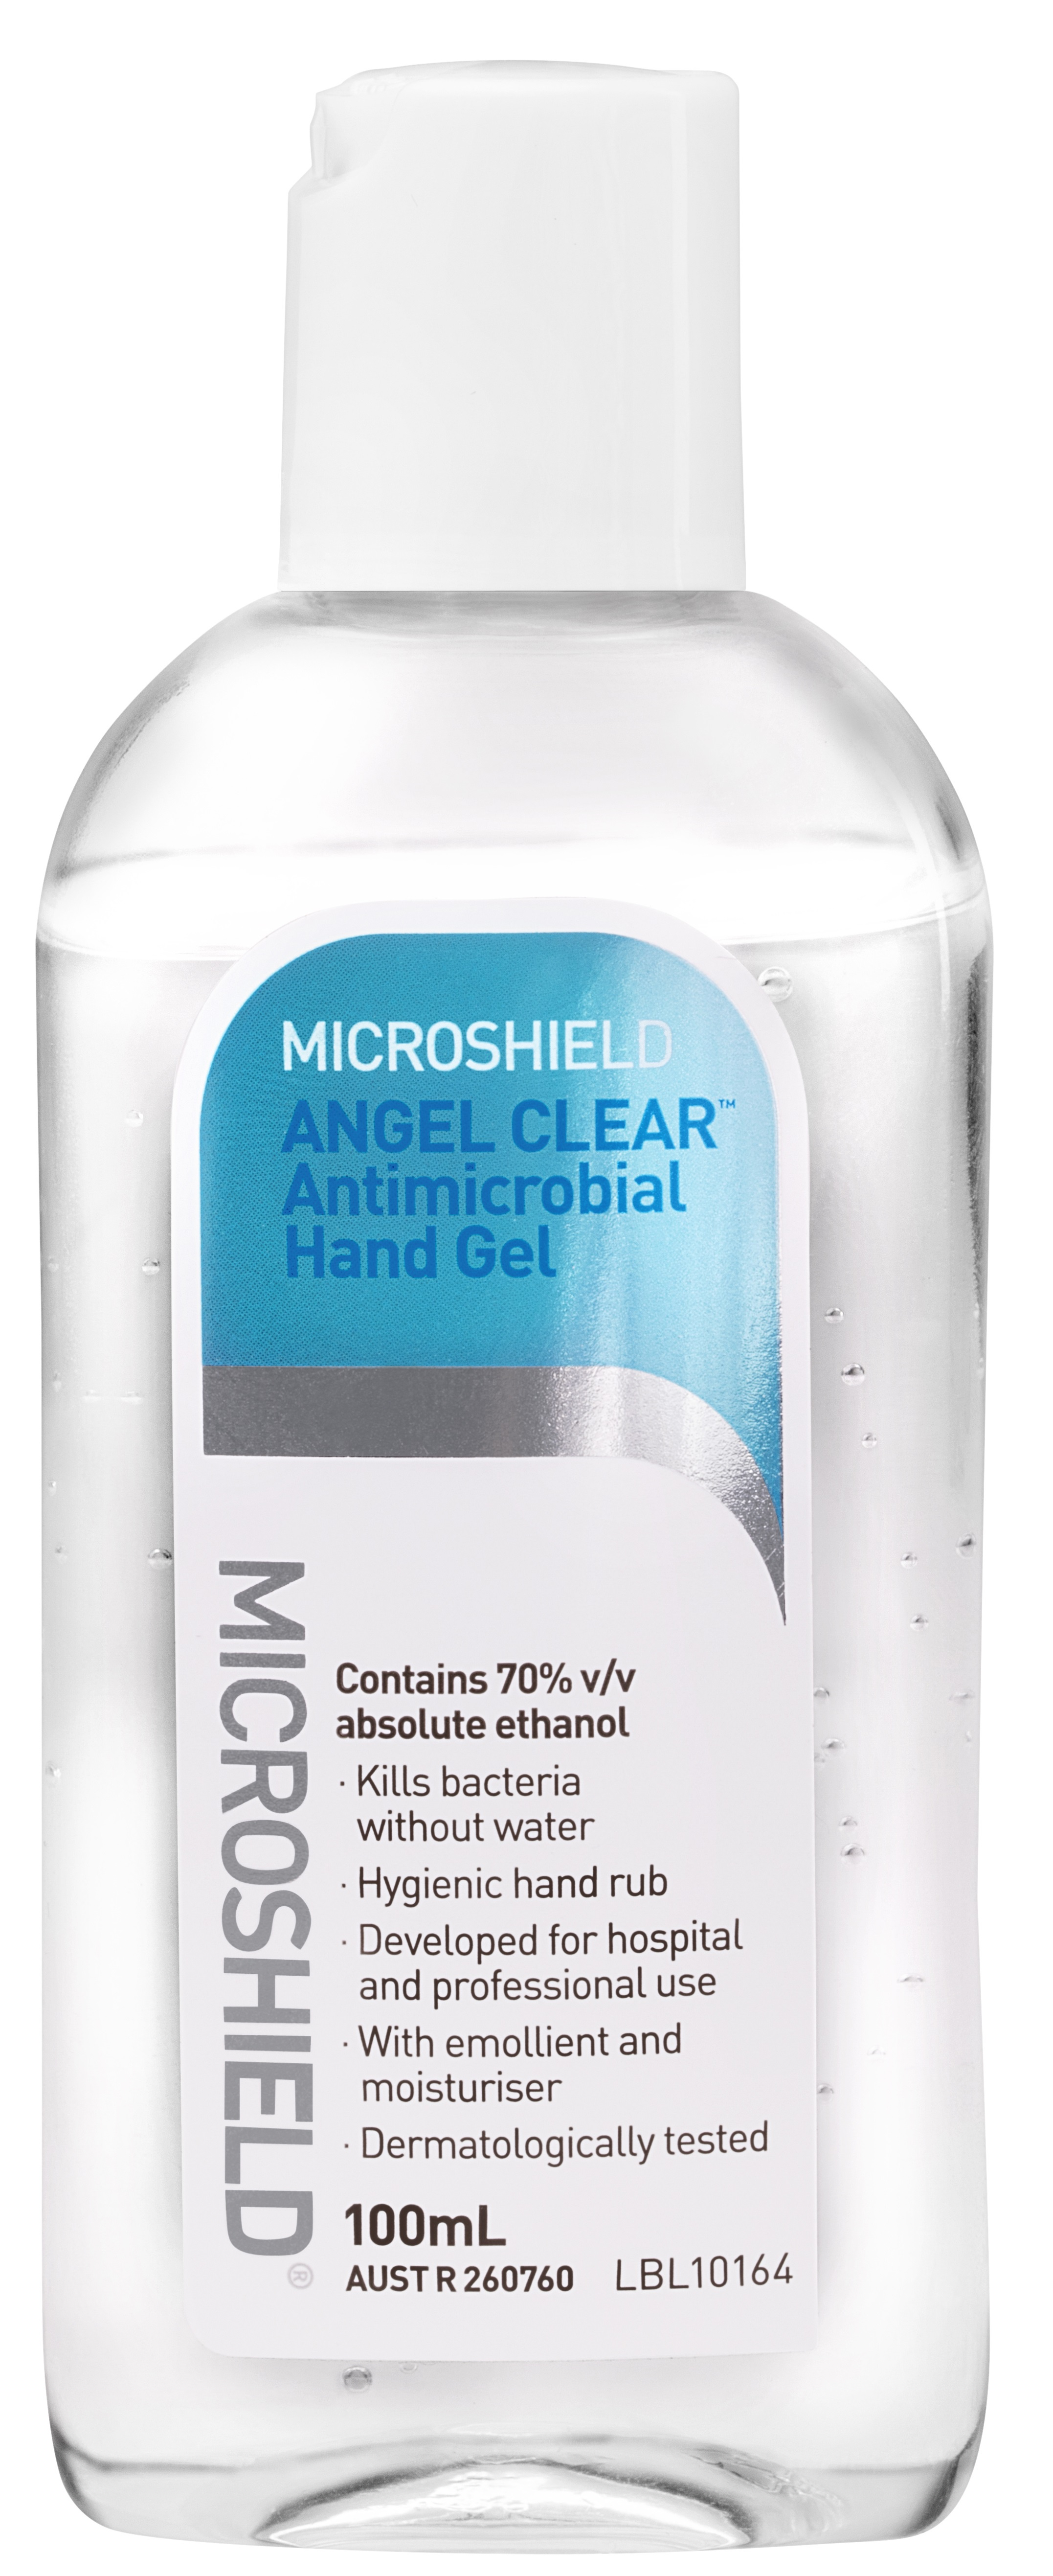 Microshield Angel Clear Antimicrobial Hand Gel 100ml